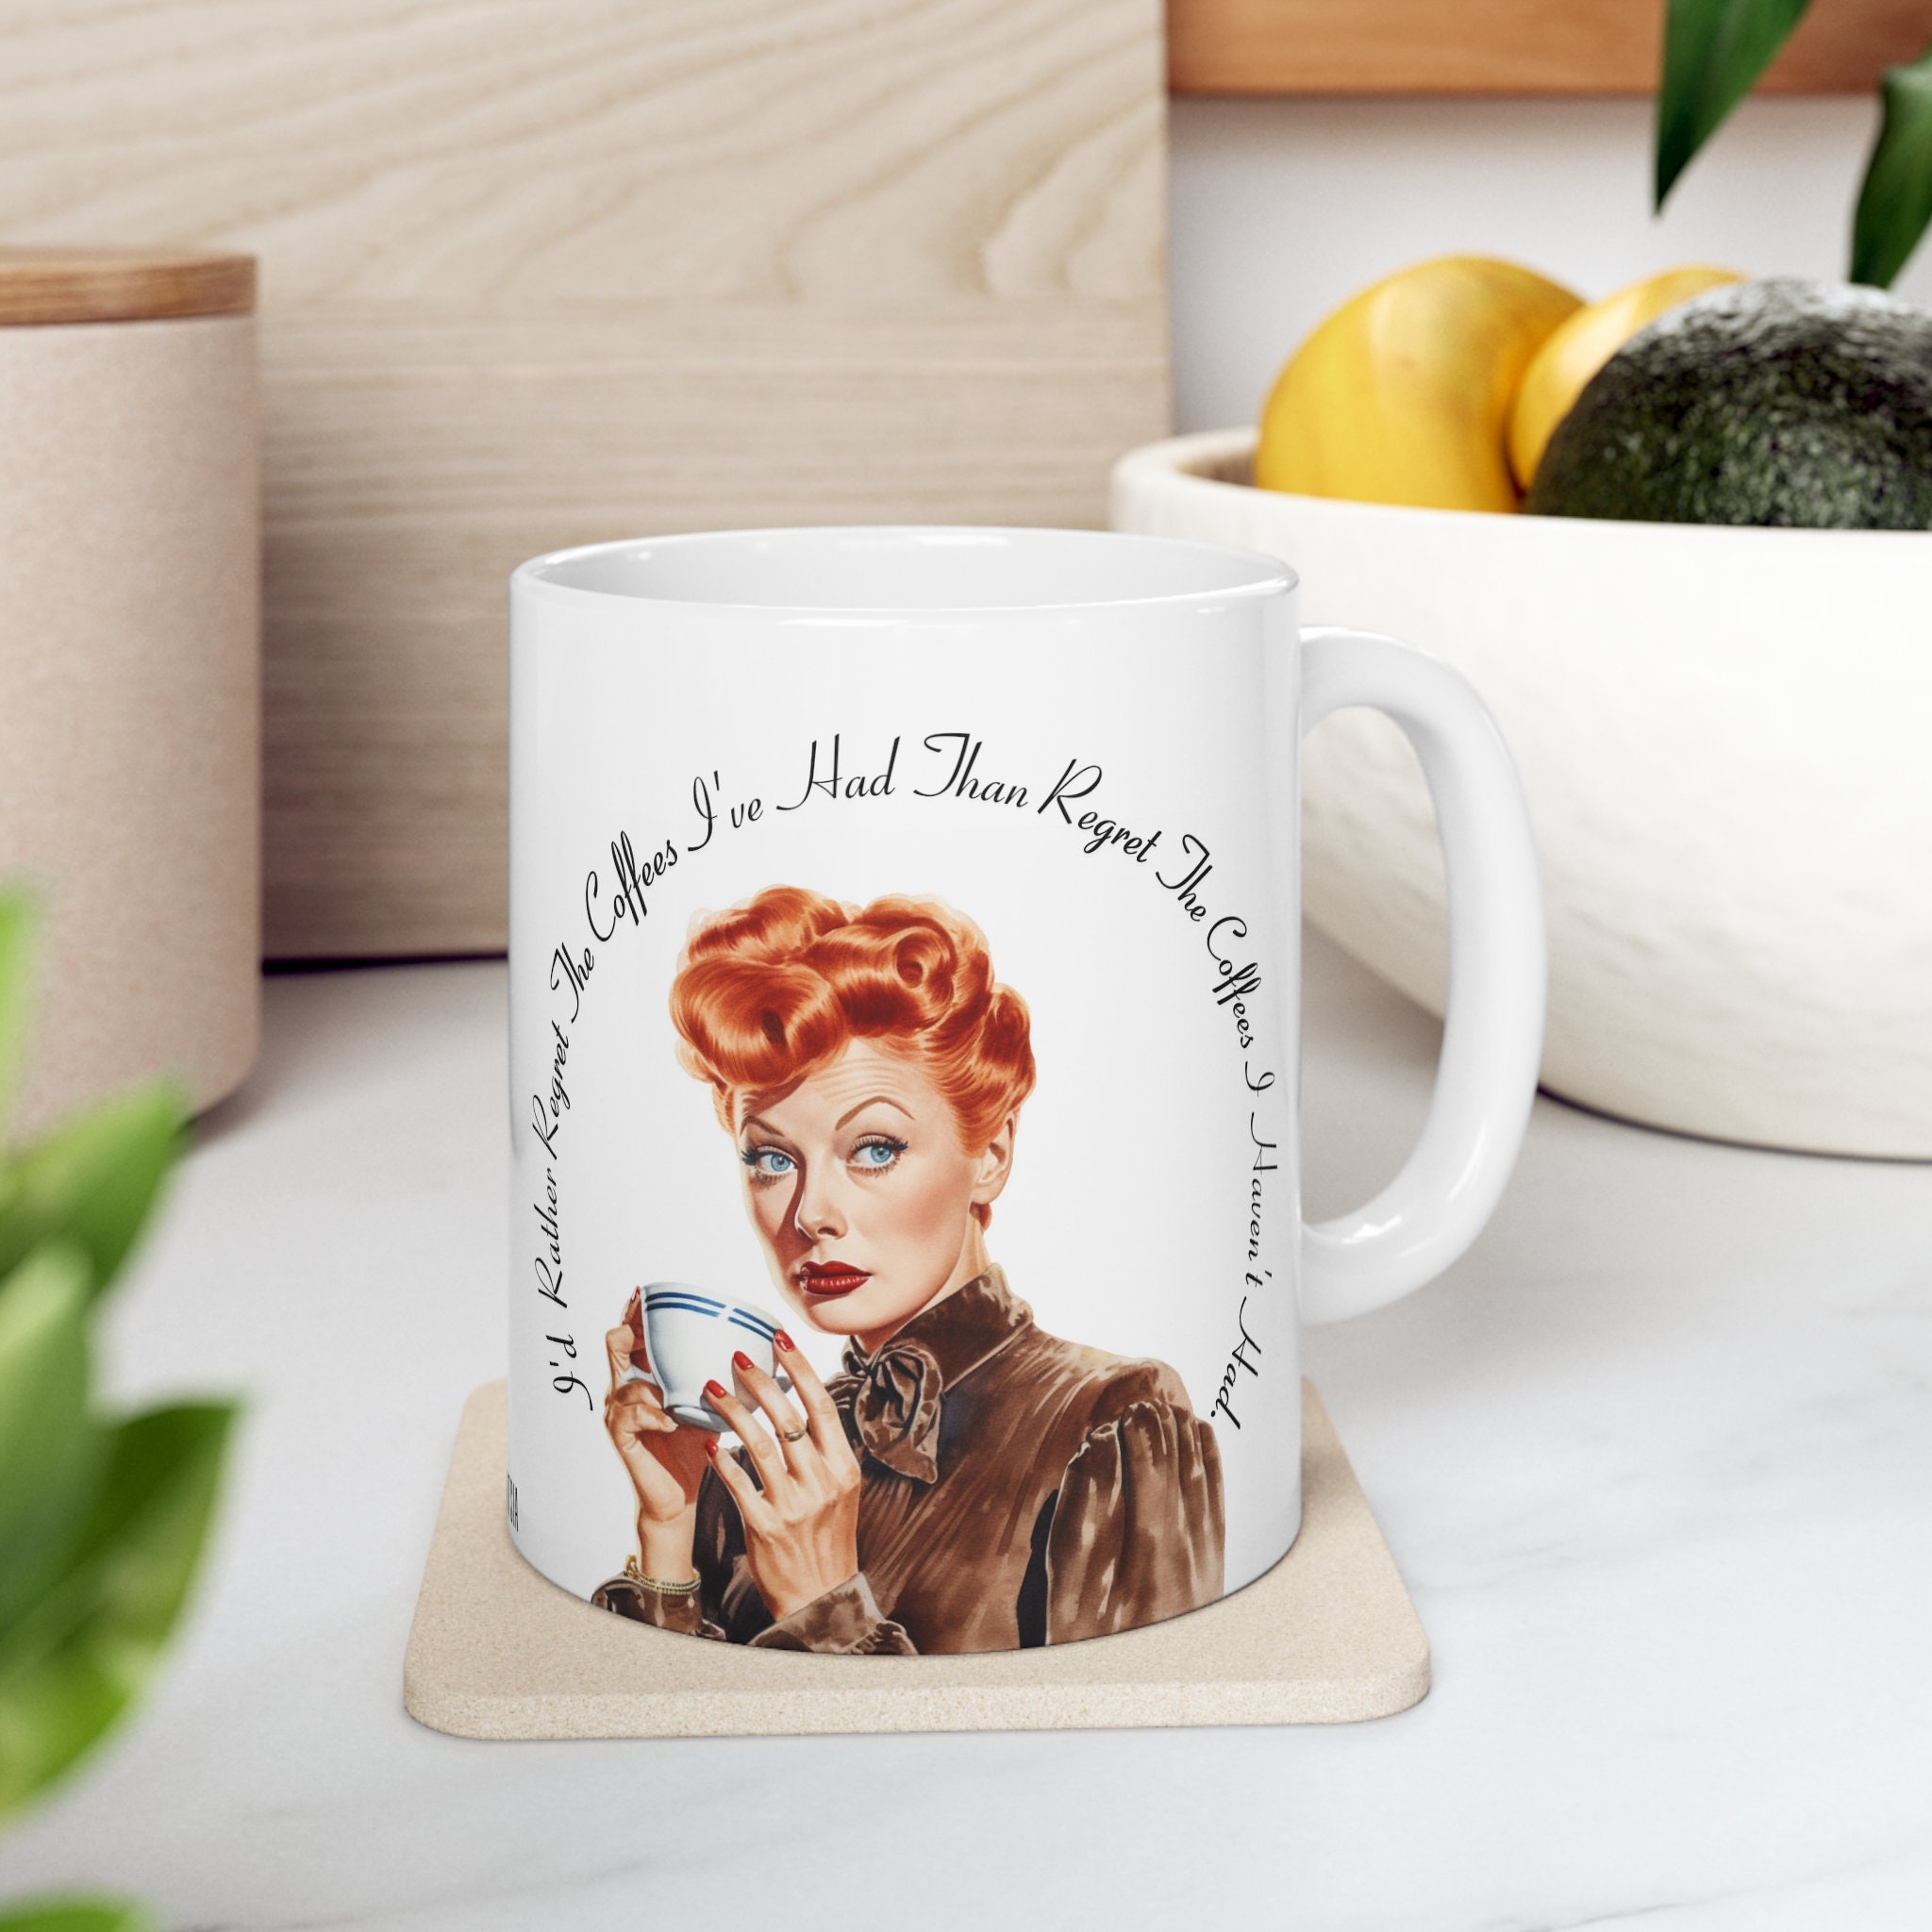 CafePress - I HAVEN't HAD MY COFFEE YET D Mug - 11 oz Ceramic Mug - Novelty  Coffee Tea Cup